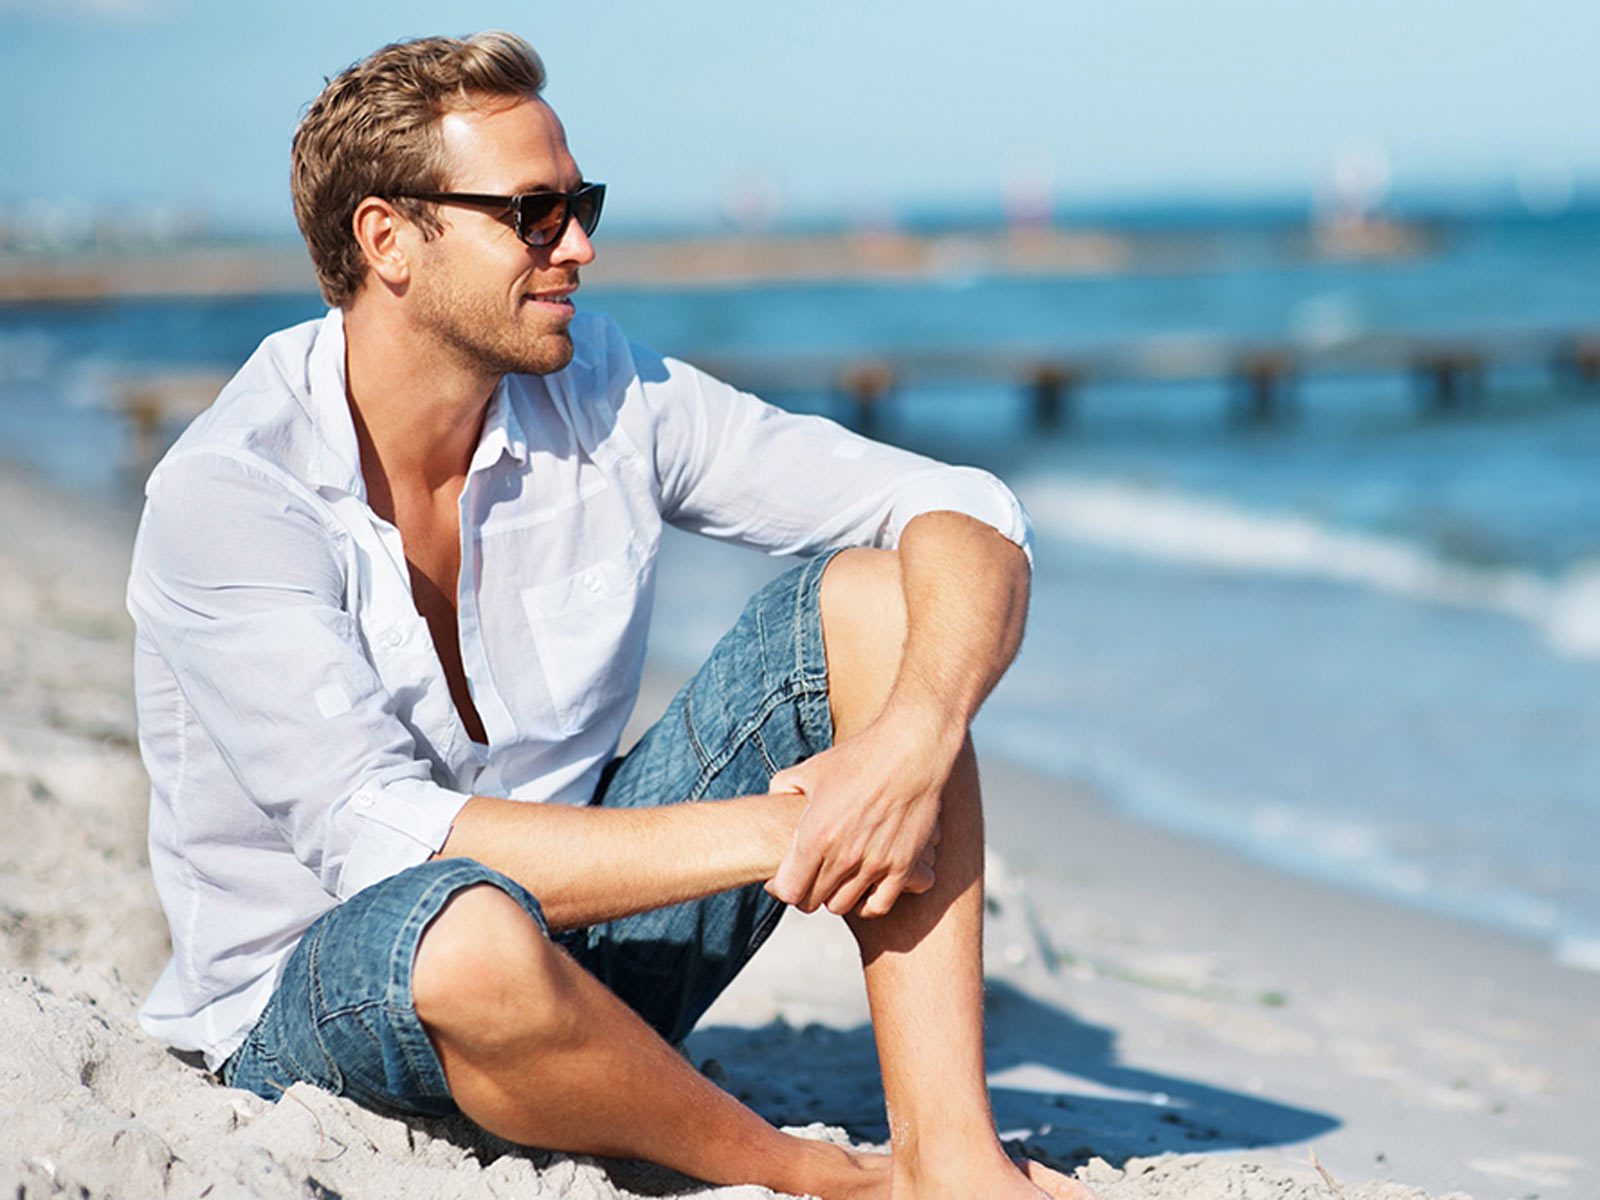 Man sitting on beach wearing button up shirt